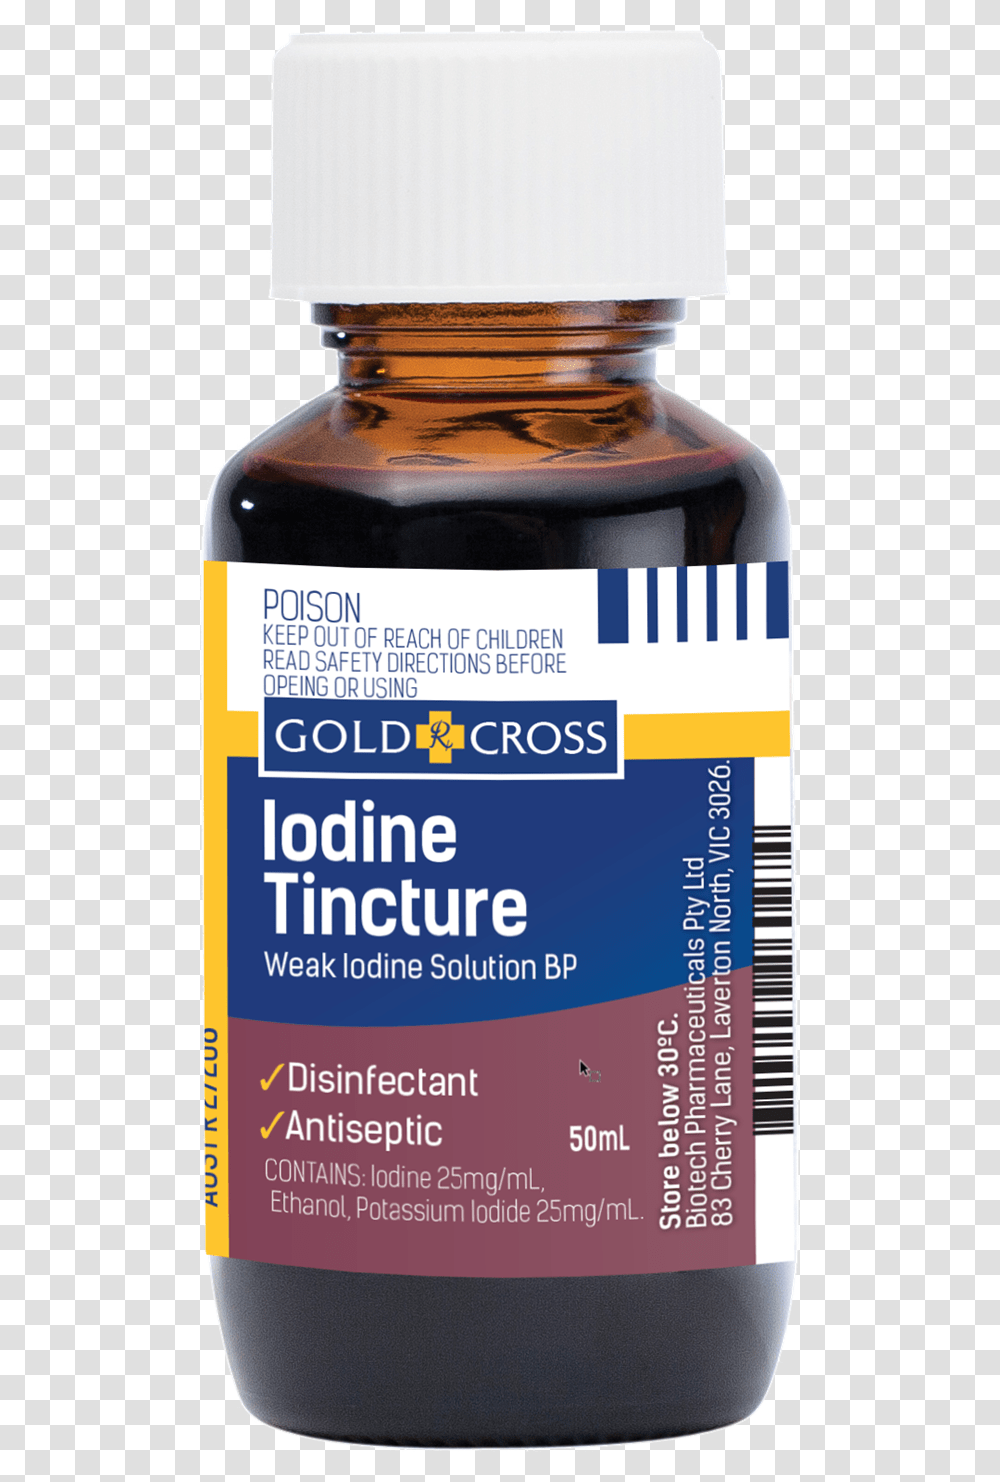 Gold Cross Iodine Tincture 50ml Iodine Tincture Weak Iodine Solution, Seasoning, Food, Syrup, Label Transparent Png